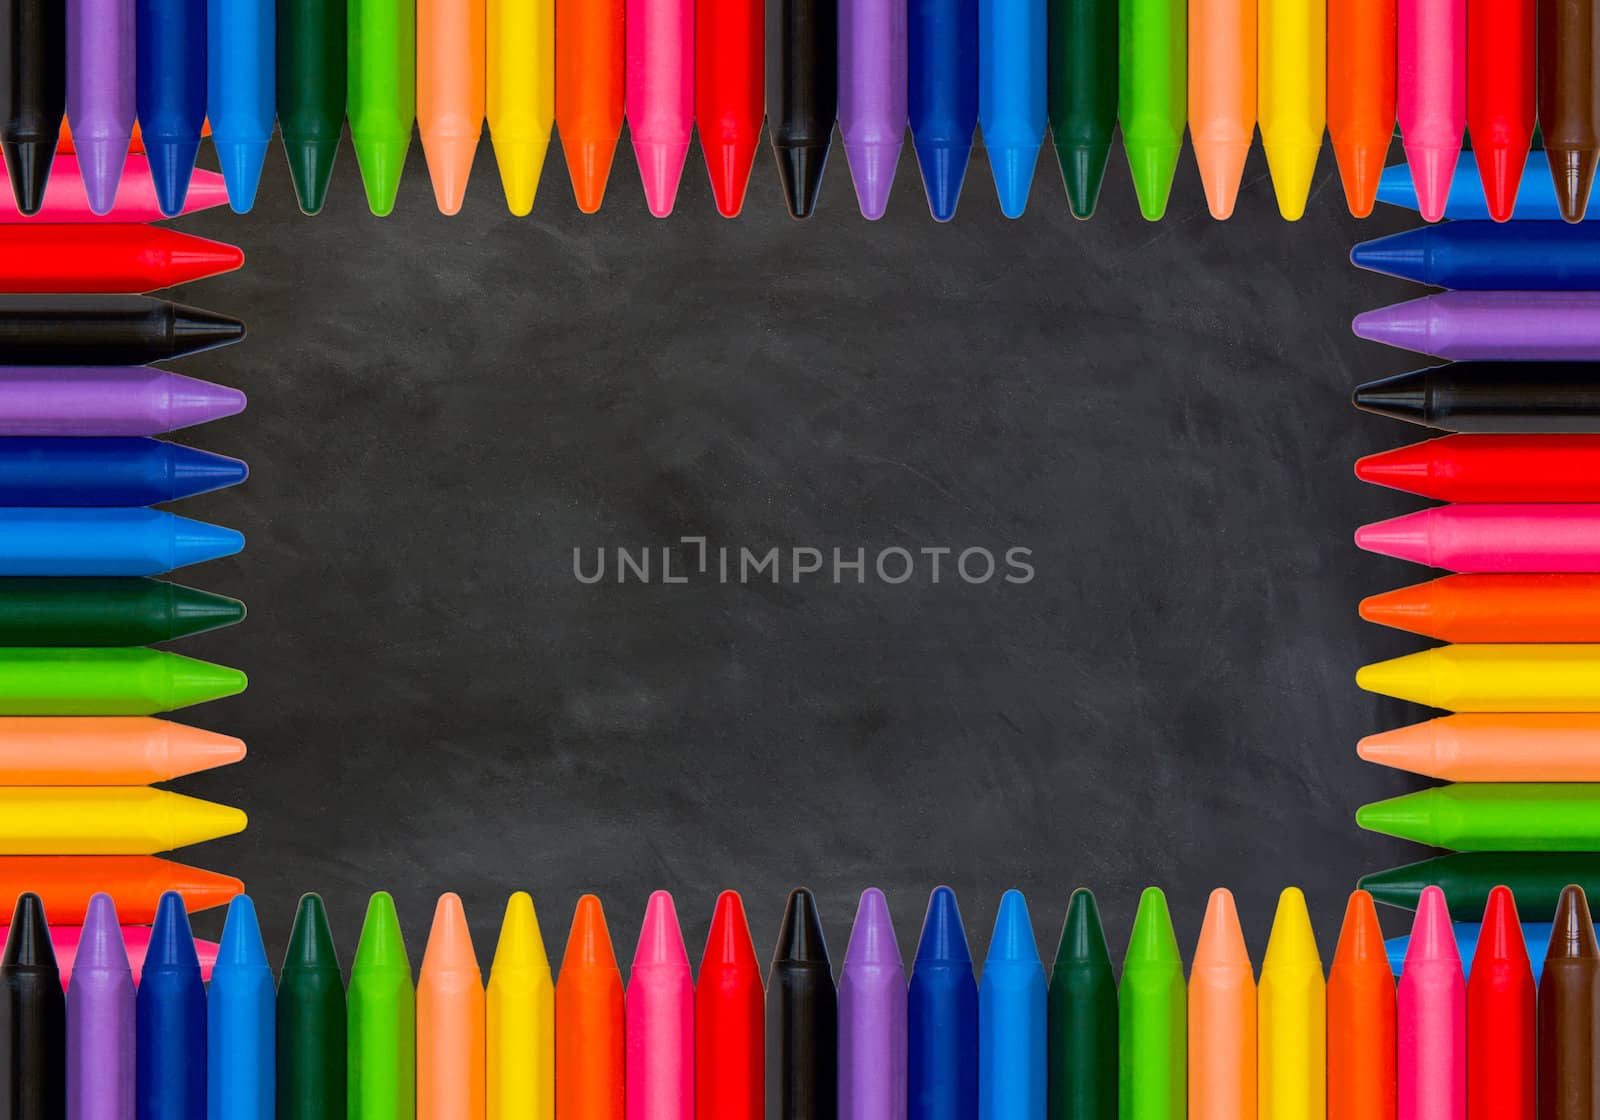 colored pencils on black chalkboard background